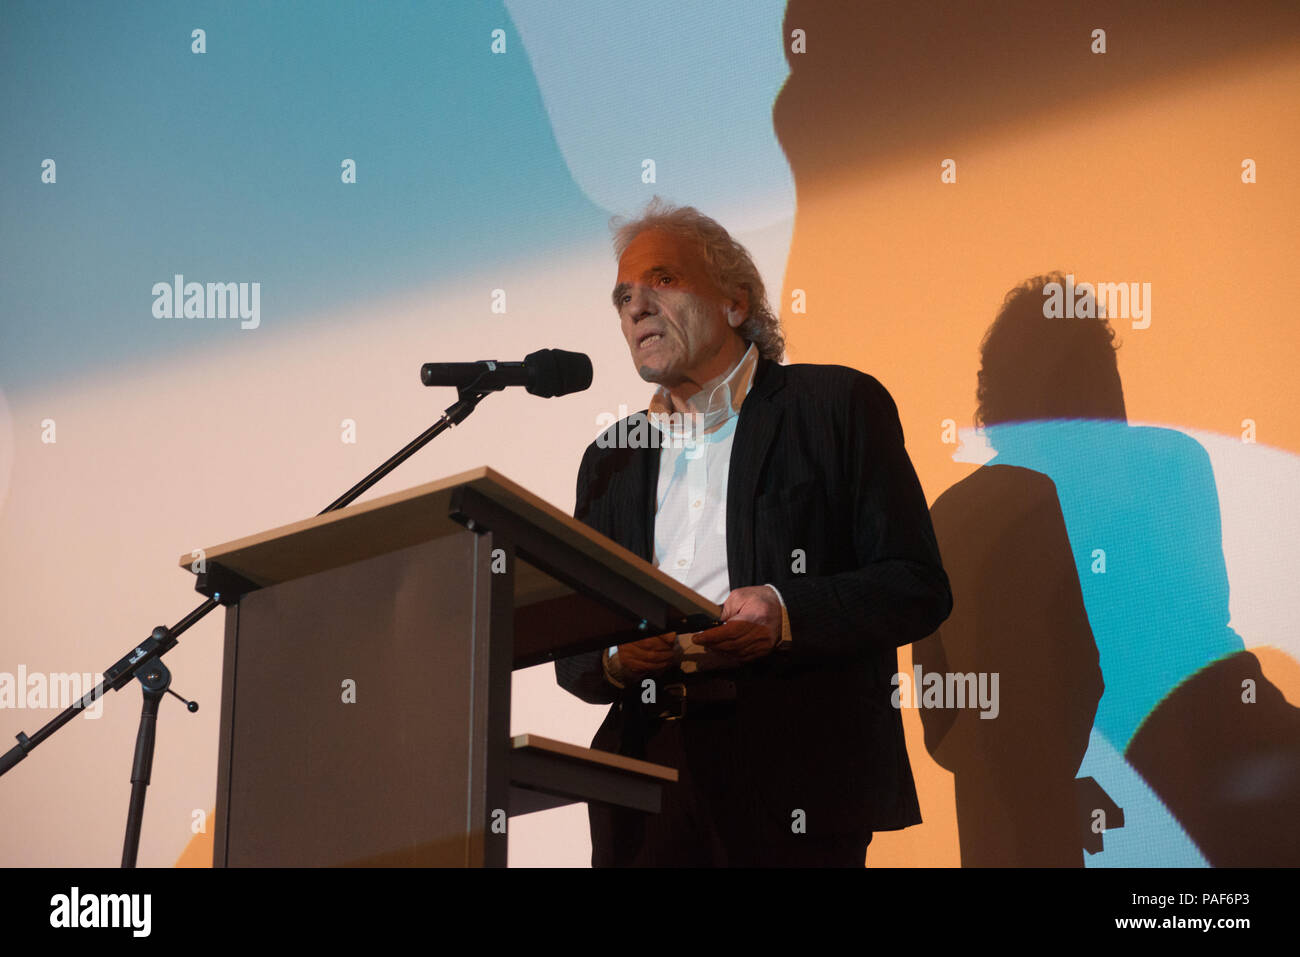 Direttore Abel Ferrara e direttore Philipp Gröning a photocall al Filmfest München 2018 Foto Stock